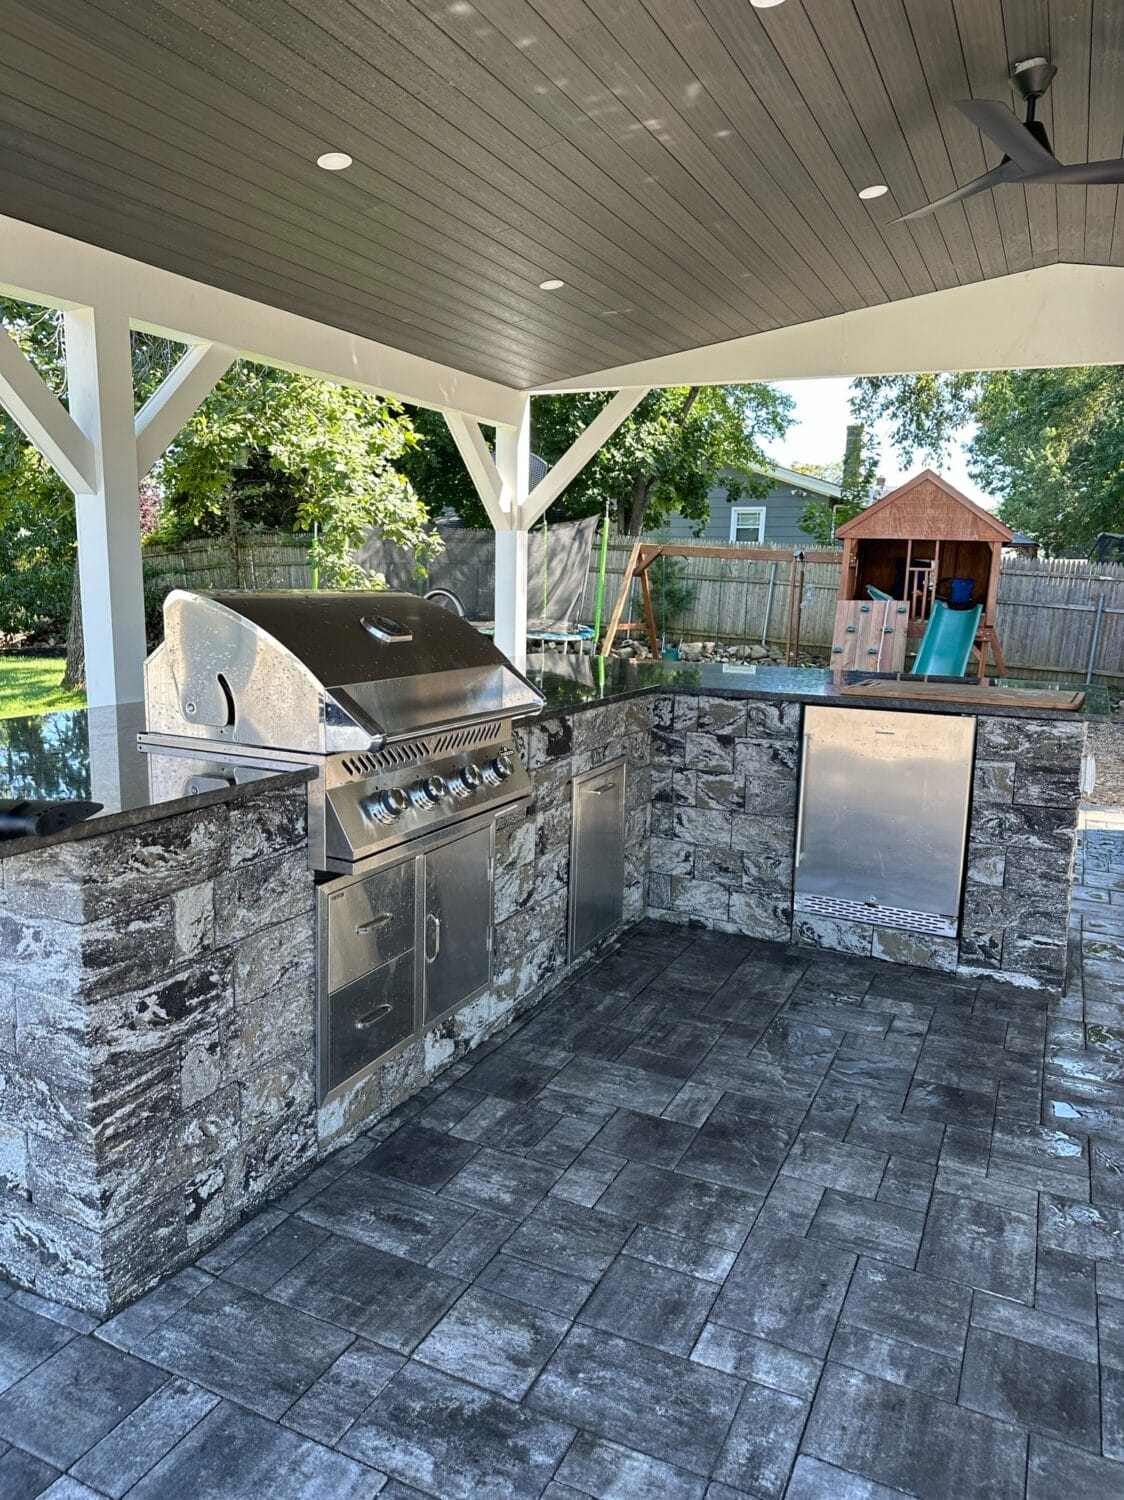 New outdoor kitchen designed by Blu Masonry